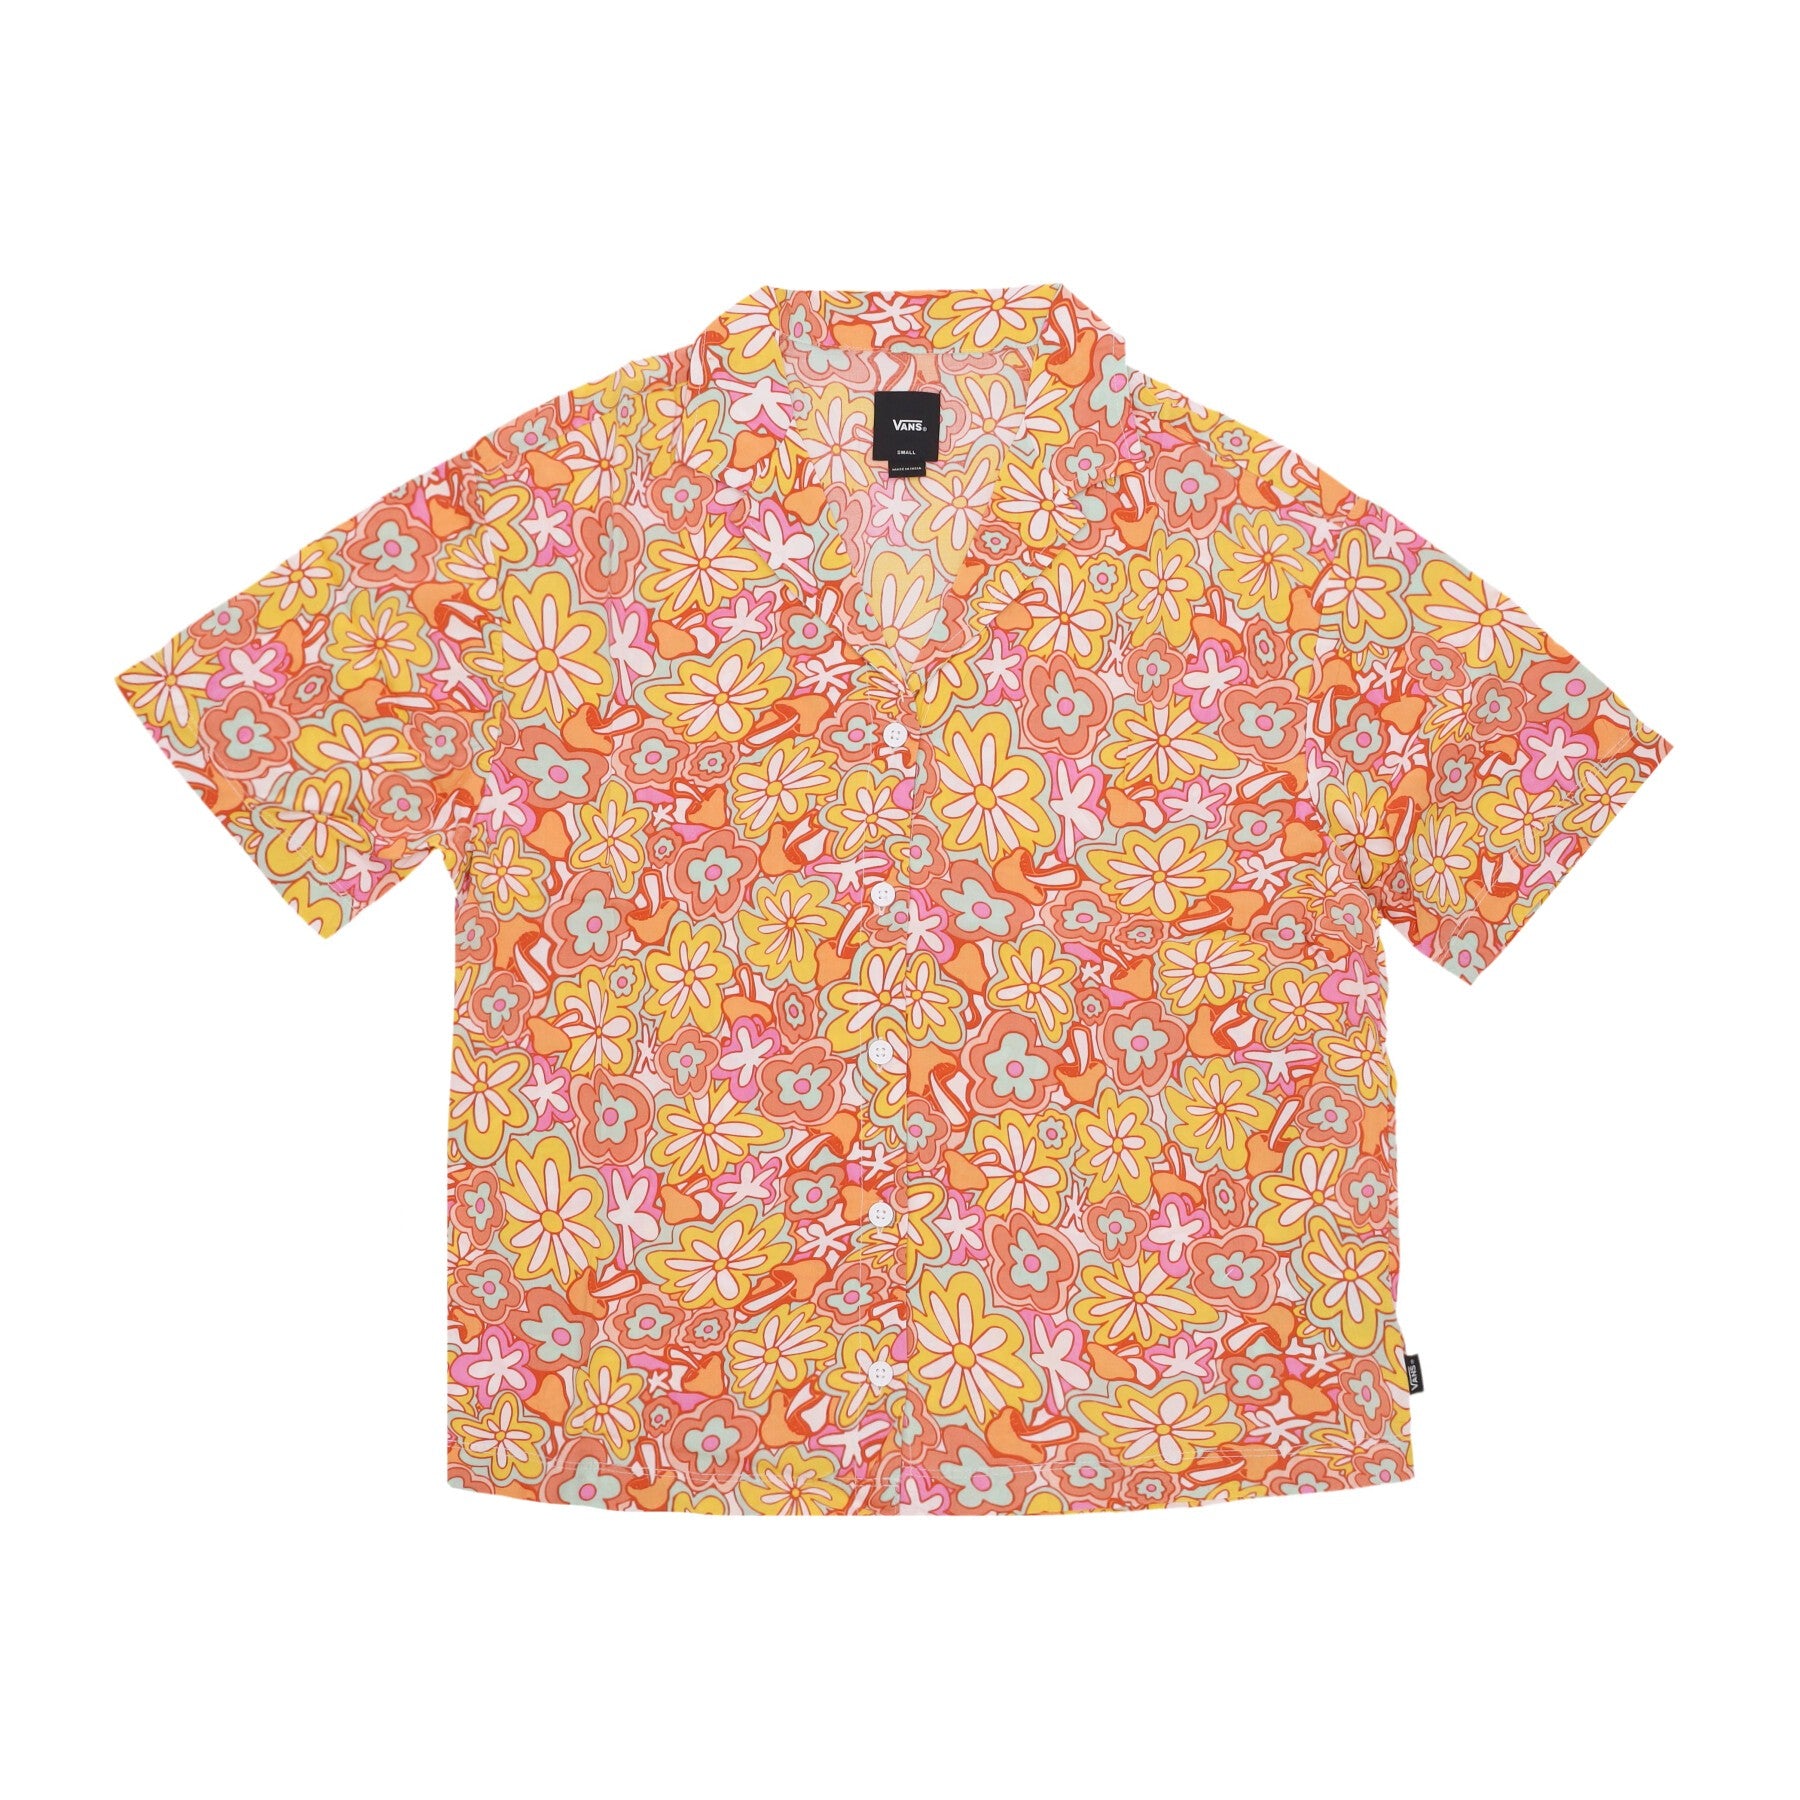 Vans, Camicia Manica Corta Donna Resort Floral Woven Shirt, Sun Baked